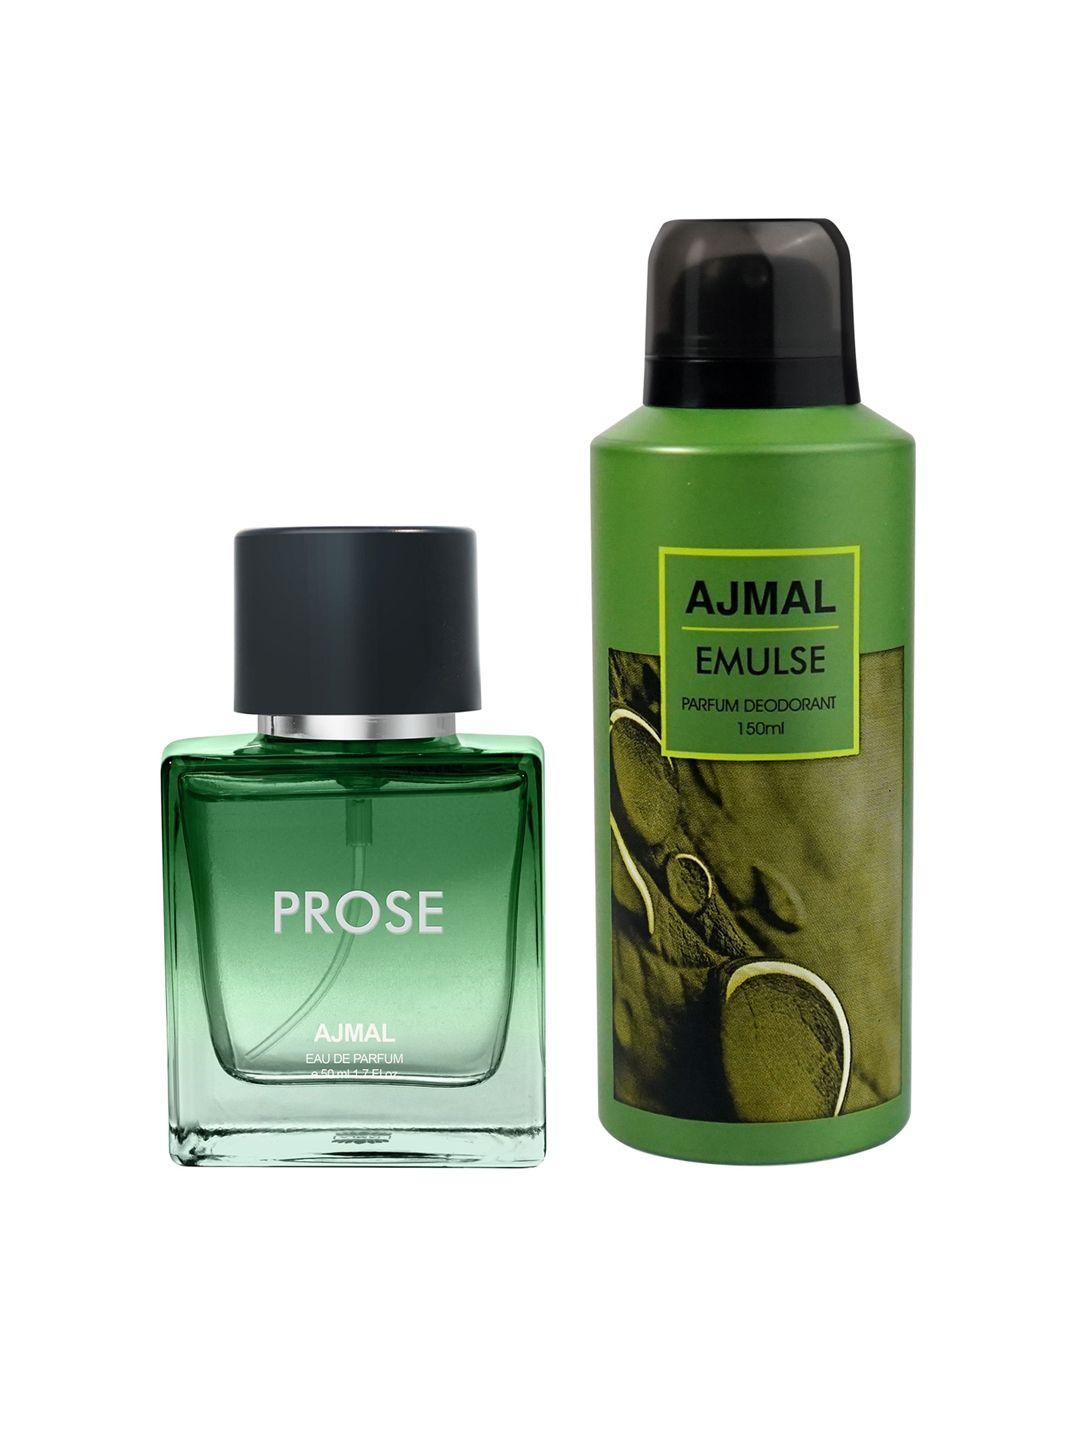 ajmal set of prose eau de parfum 50ml & emulse deodorant 150ml